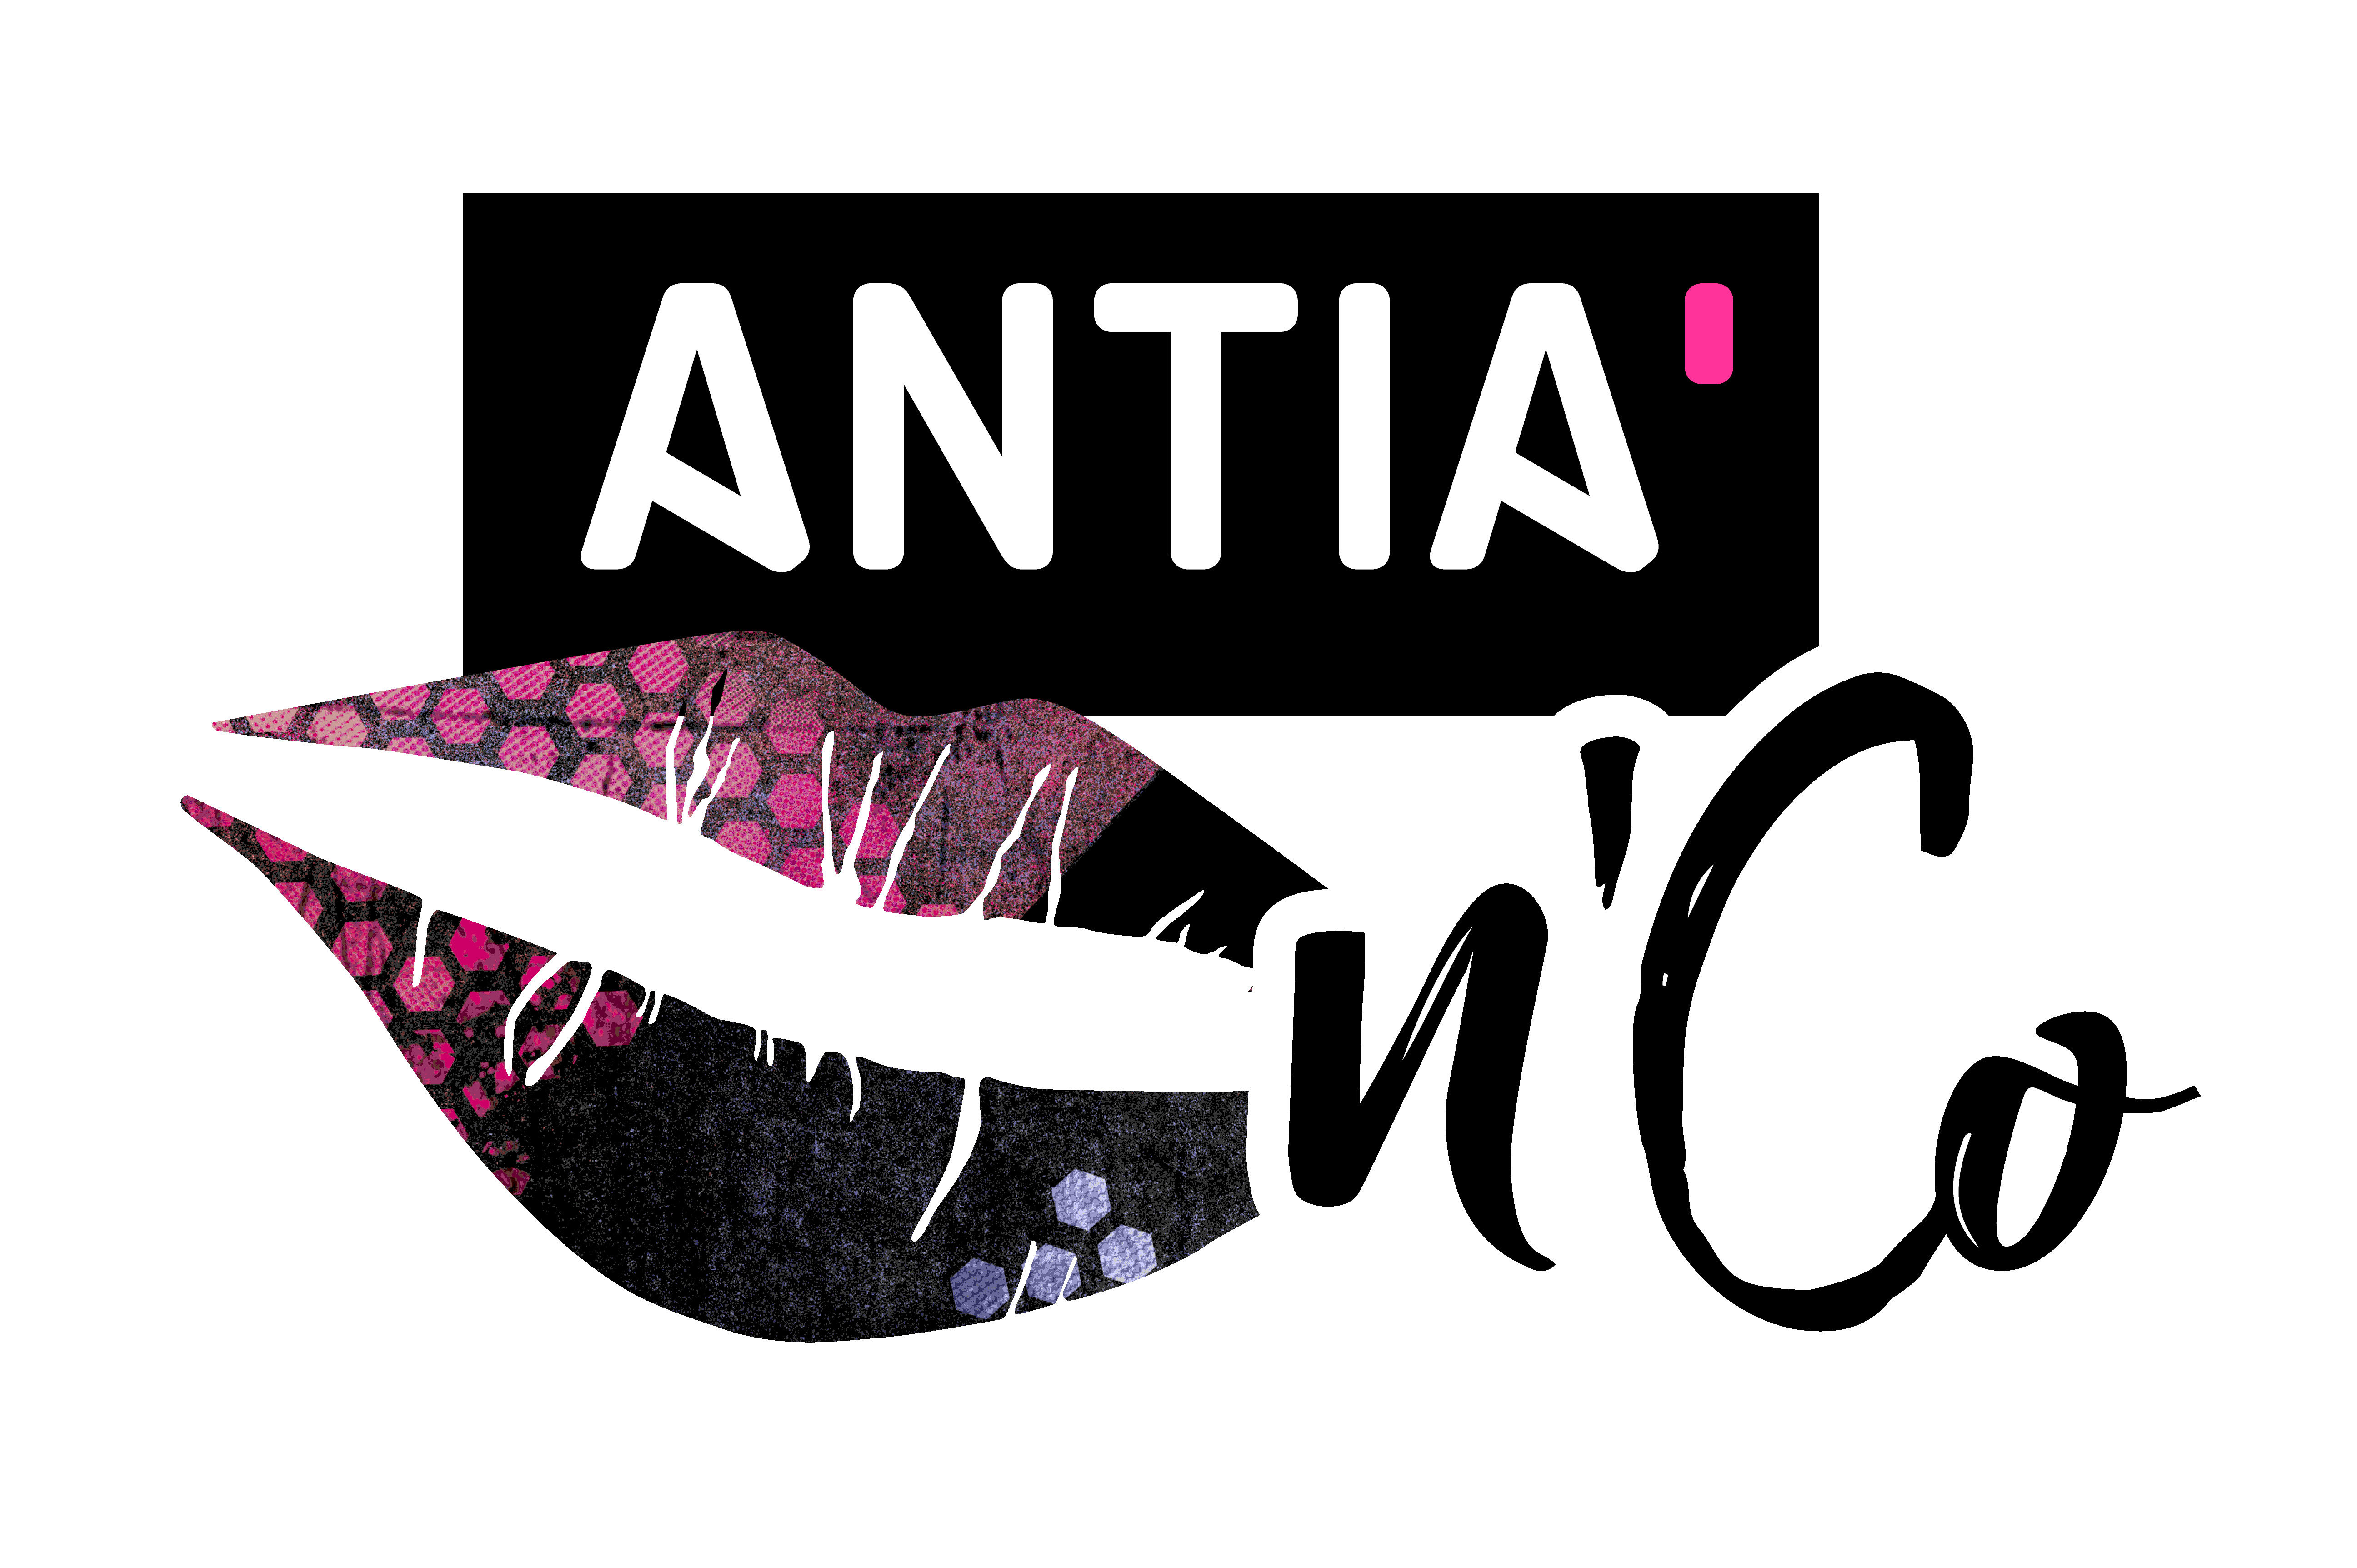 Logo Antia